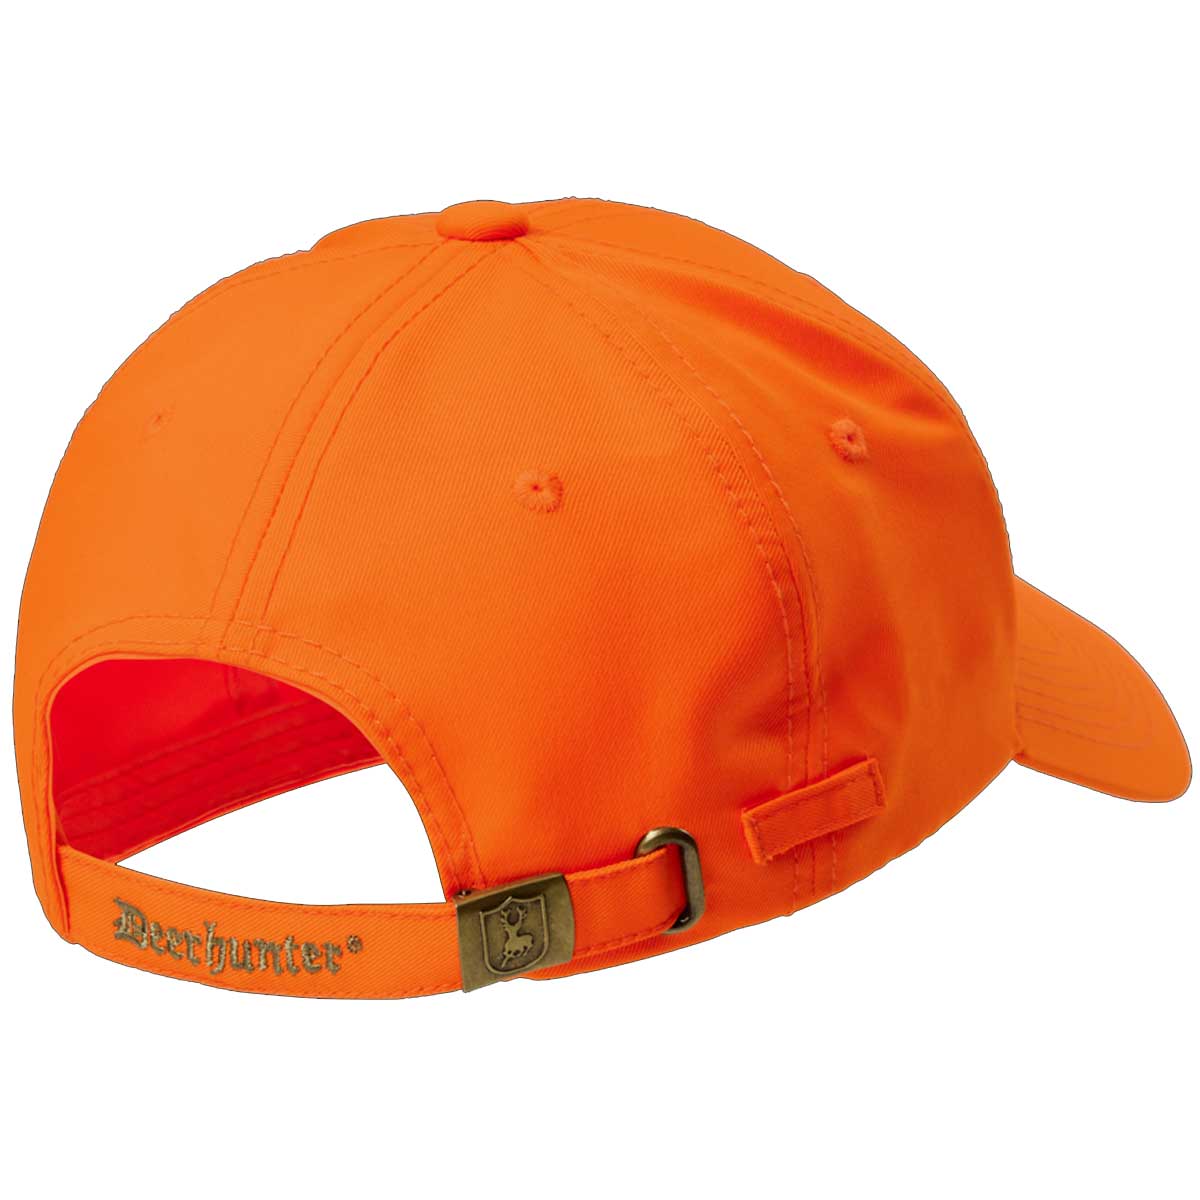 DEERHUNTER Shield Cap - Orange